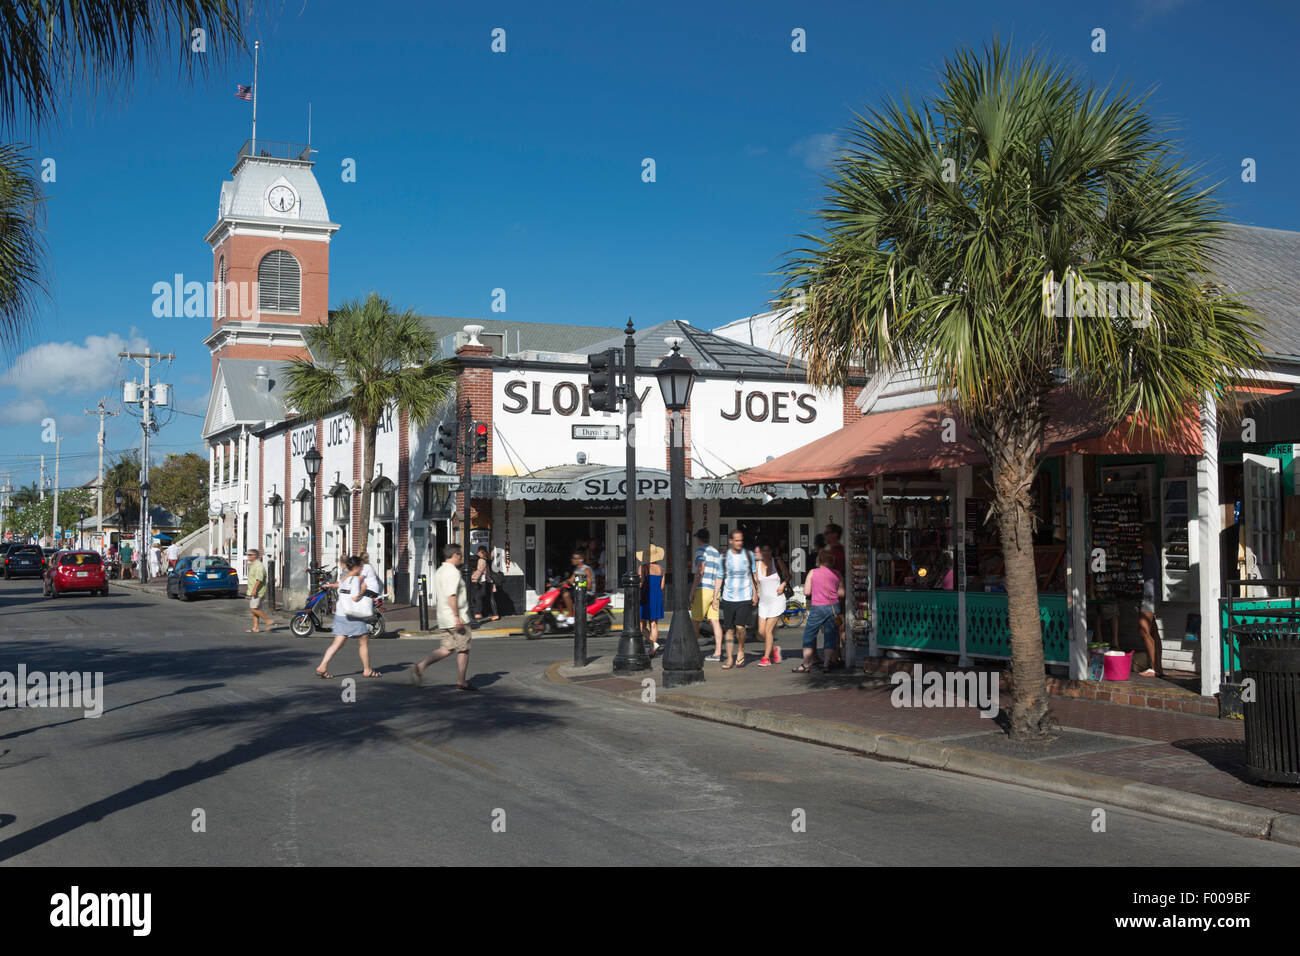 SLOPPY JOES LANDMARK BAR DUVAL STREET KEY WEST FLORIDA USA Stock Photo